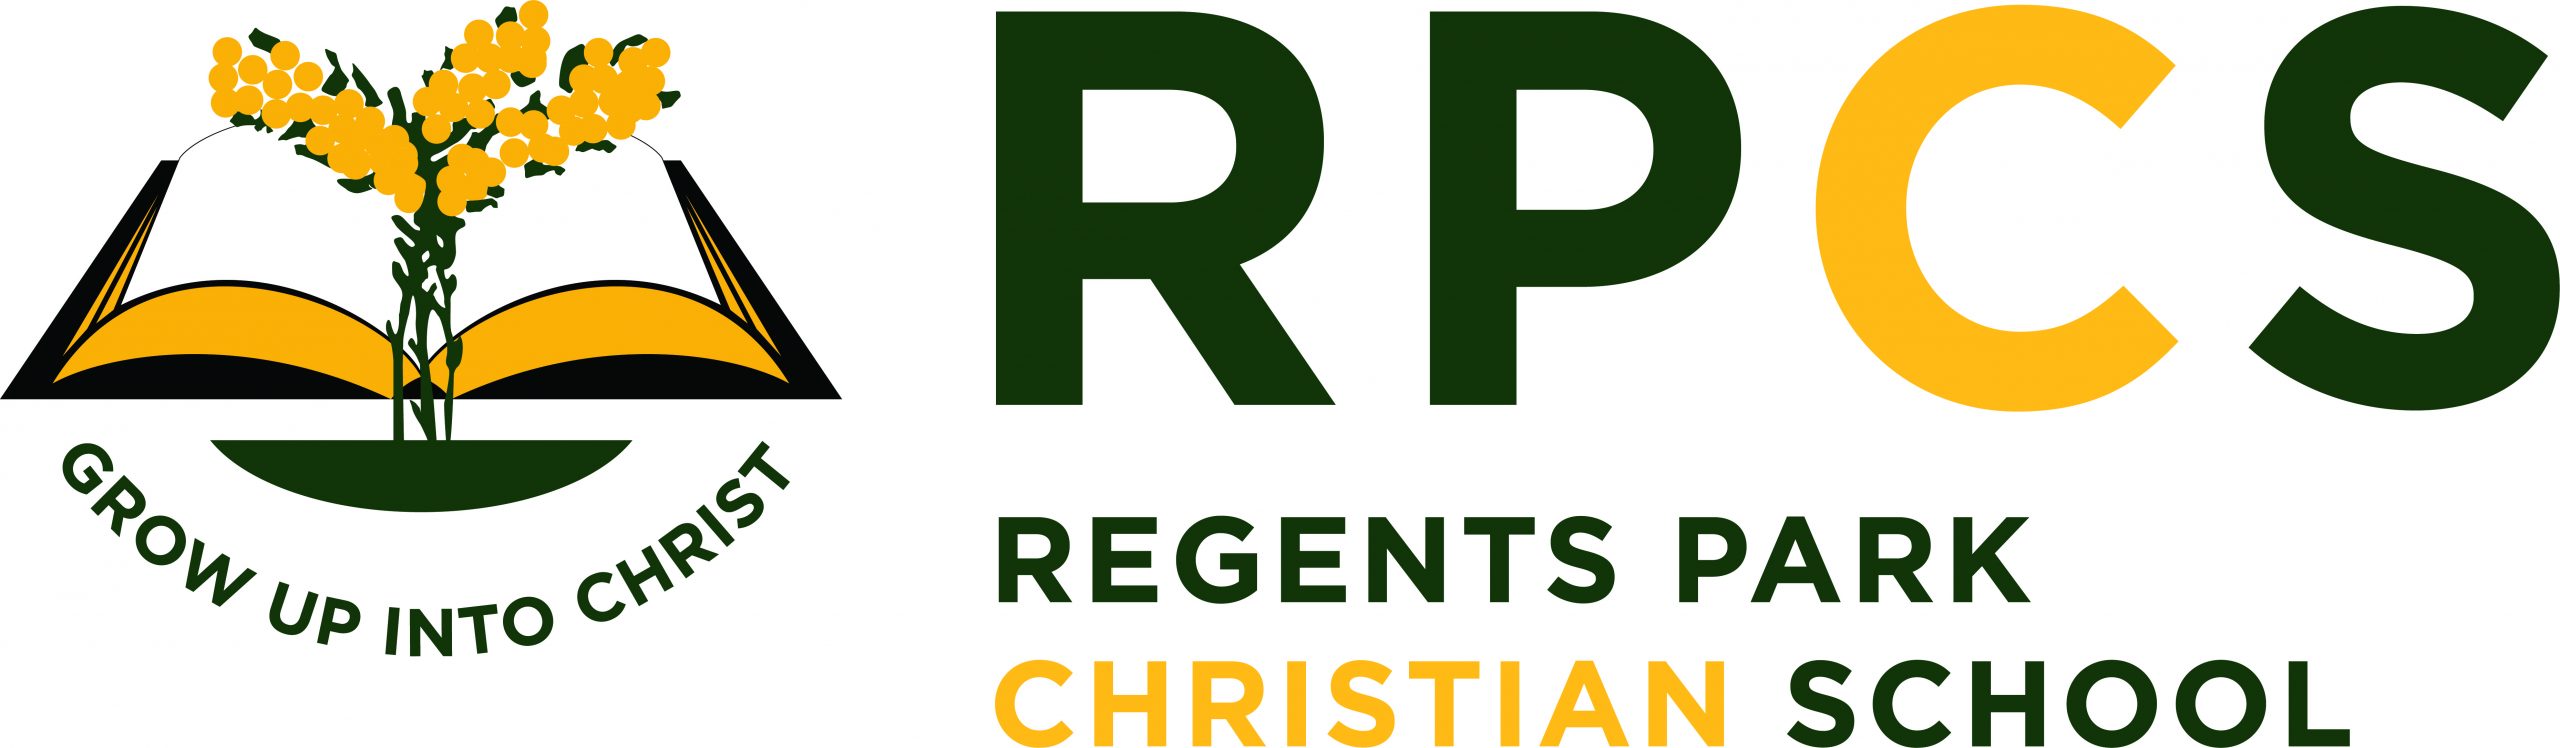 Regents Park Christian School | Discover Your Child's Potential